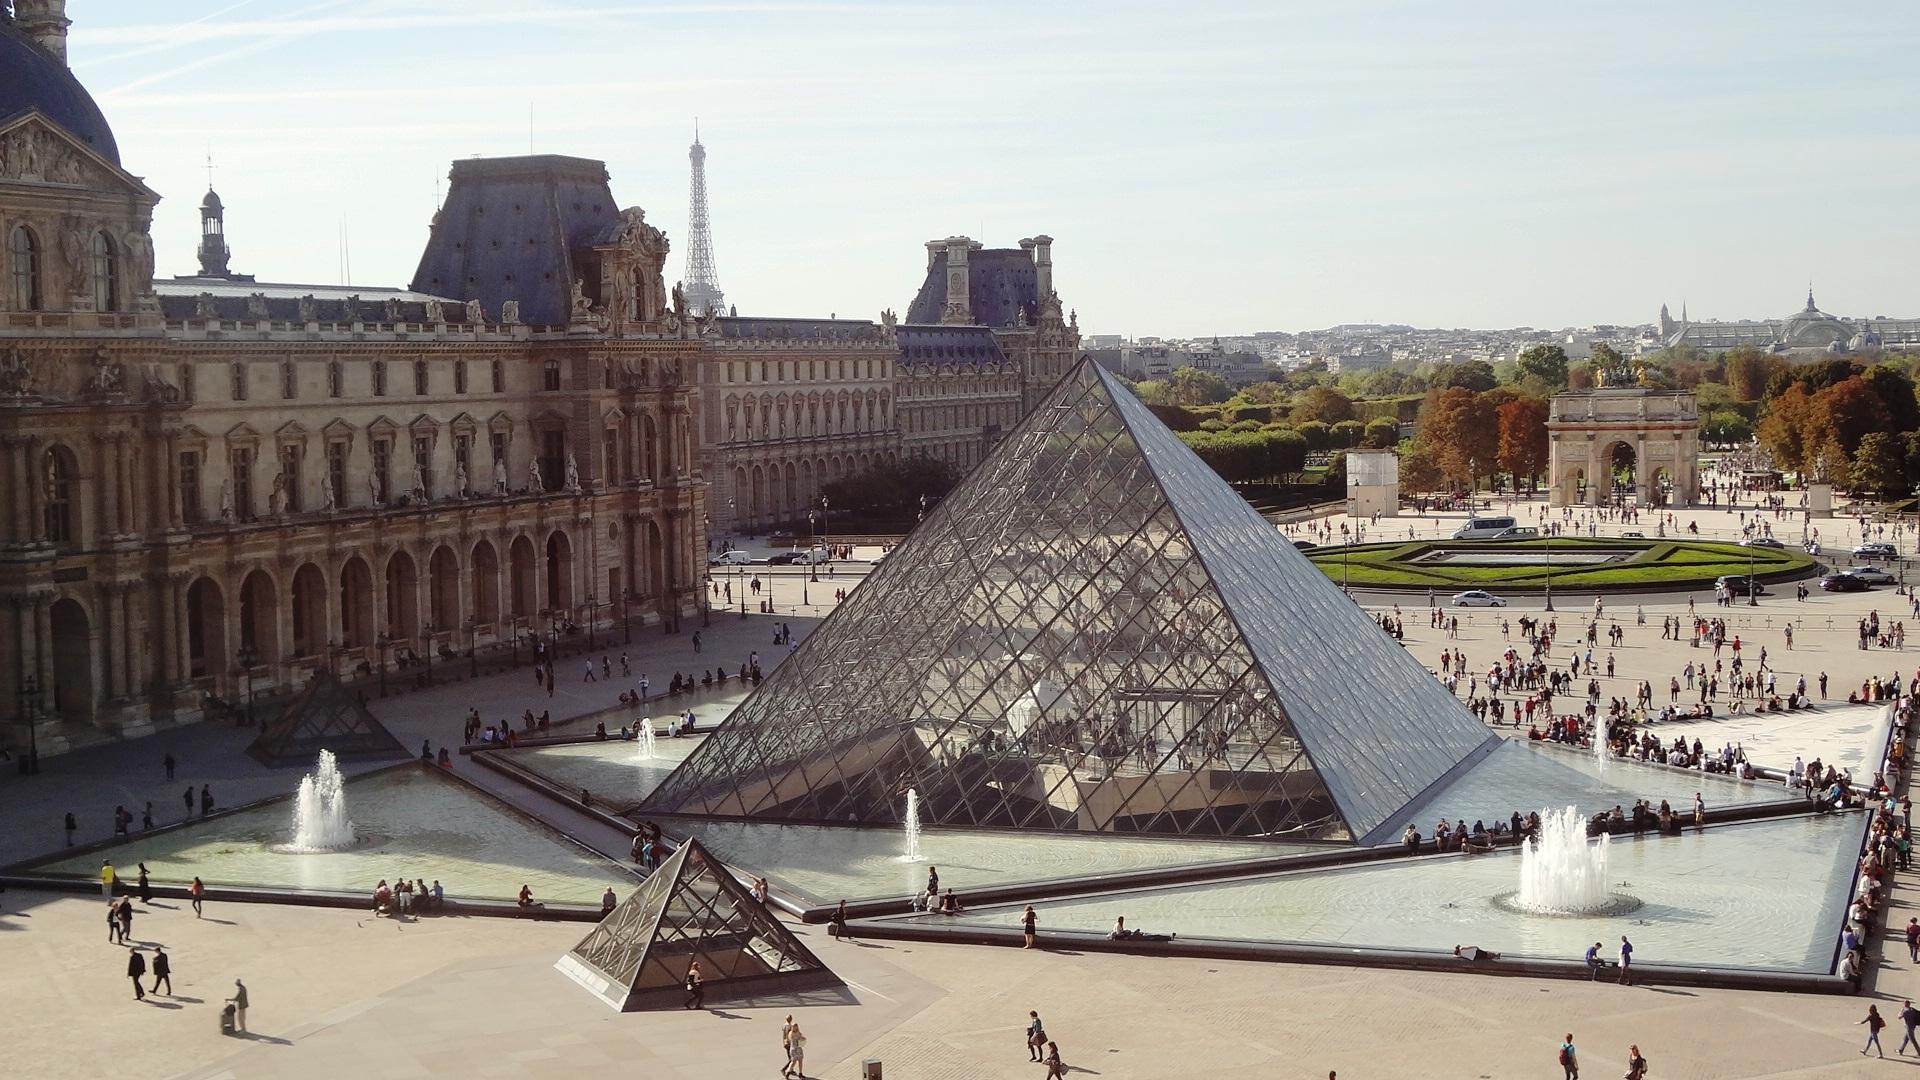 Free Image, paris, monument, louvre, pyramid, landmark, tourism